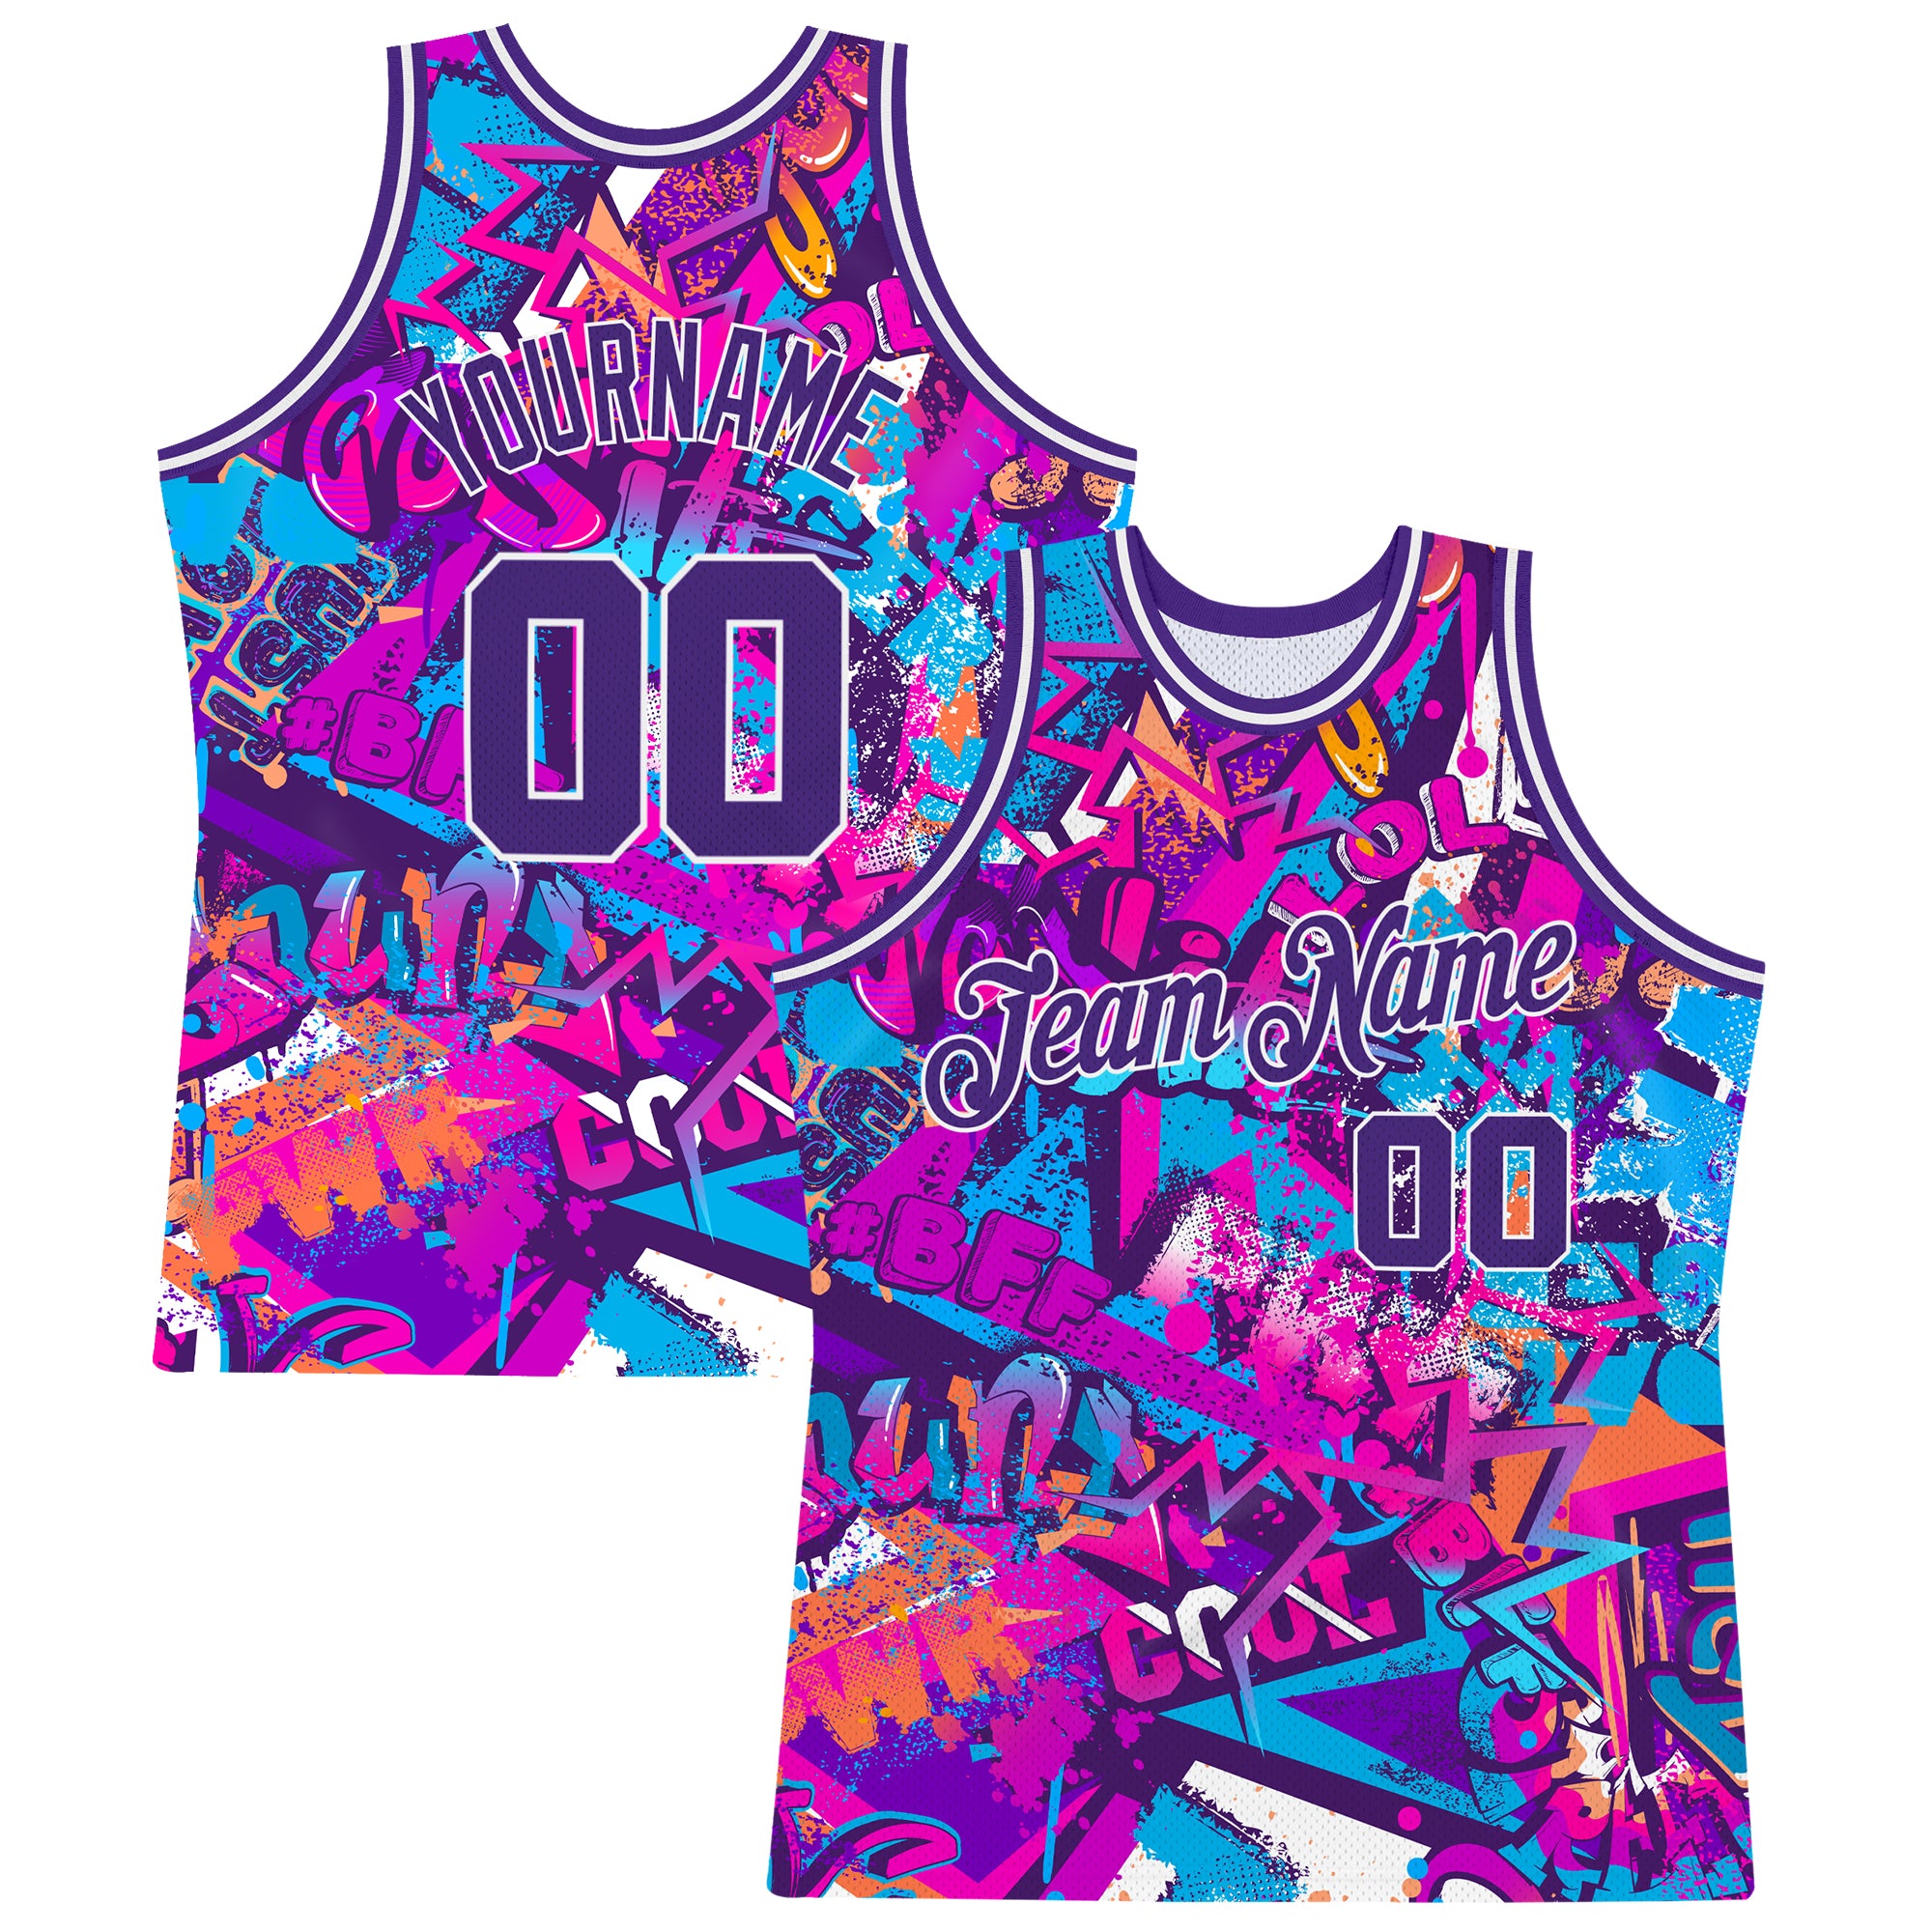 FIITG Custom Basketball Jersey Tie Dye Purple-White 3D Pattern Design Watercolor Gradient Authentic